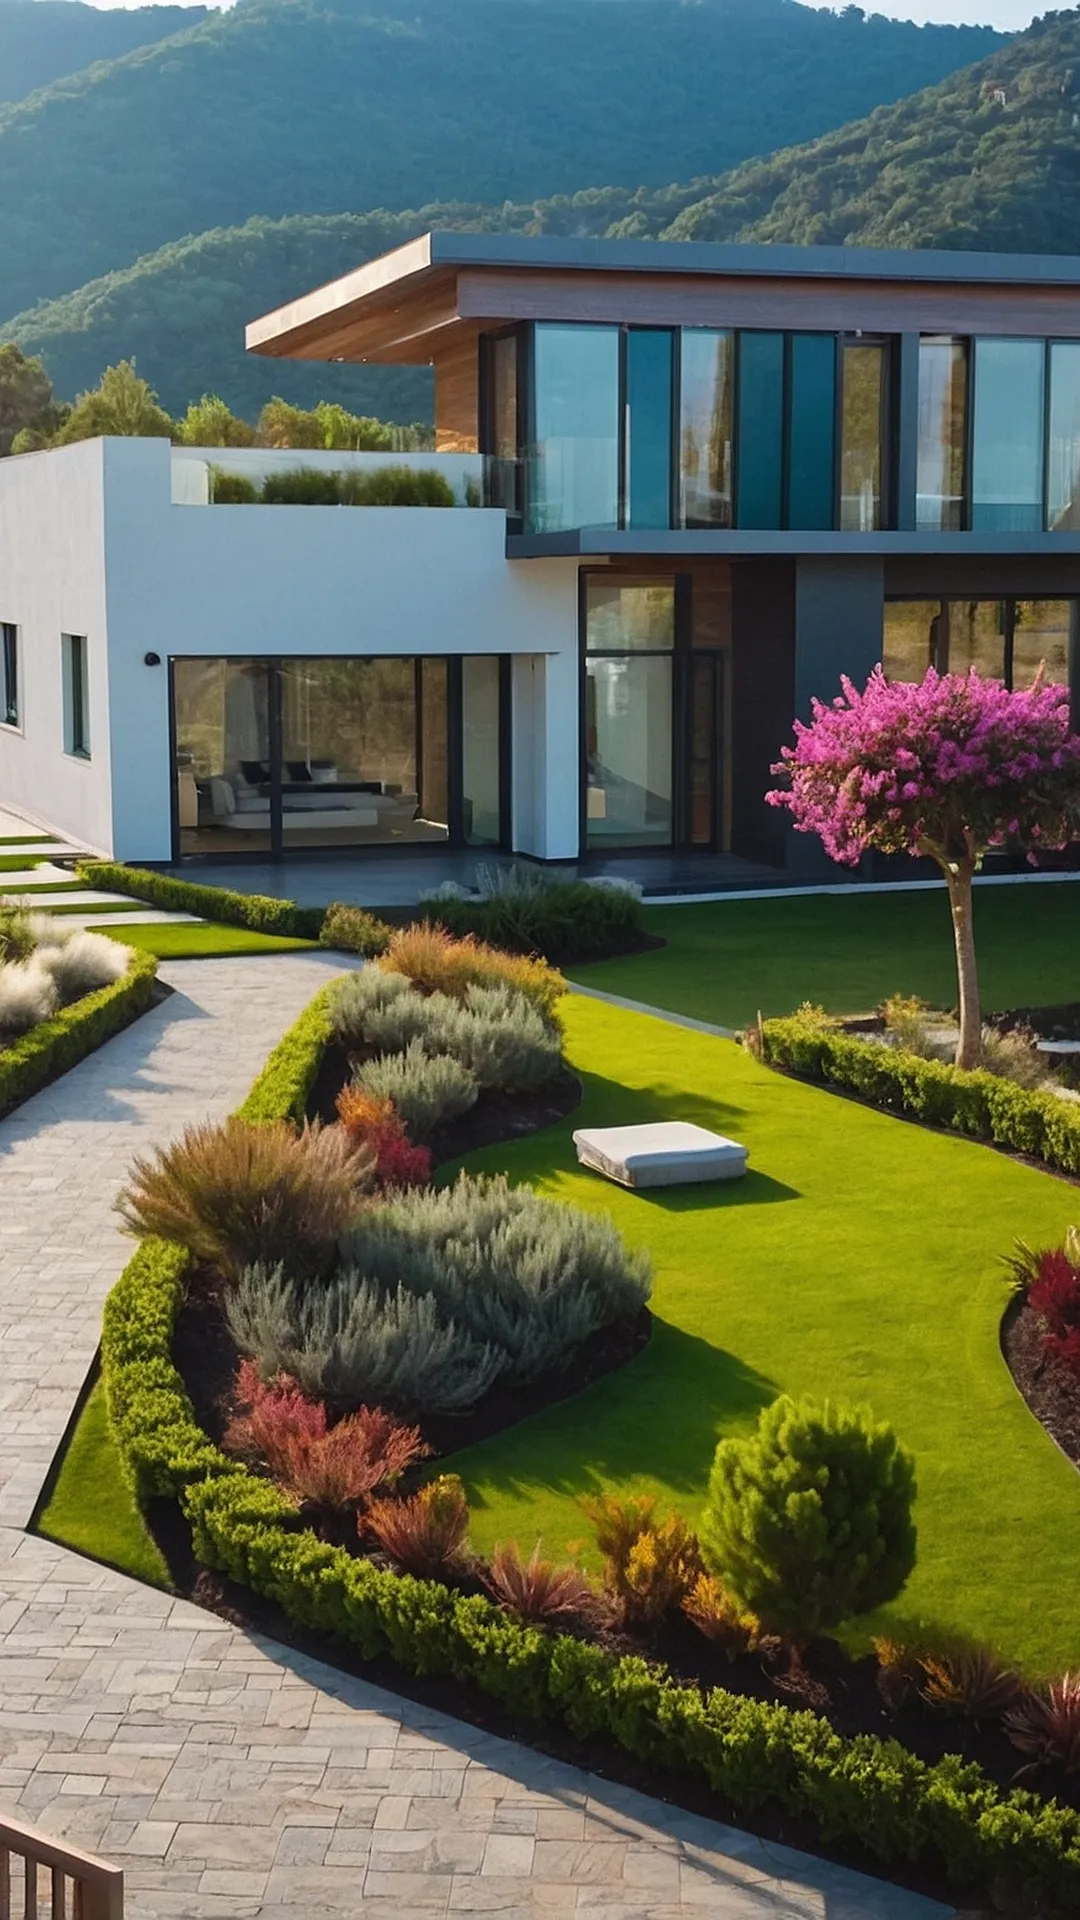 Glass and Steel: Modern Villas That Define Sophistication